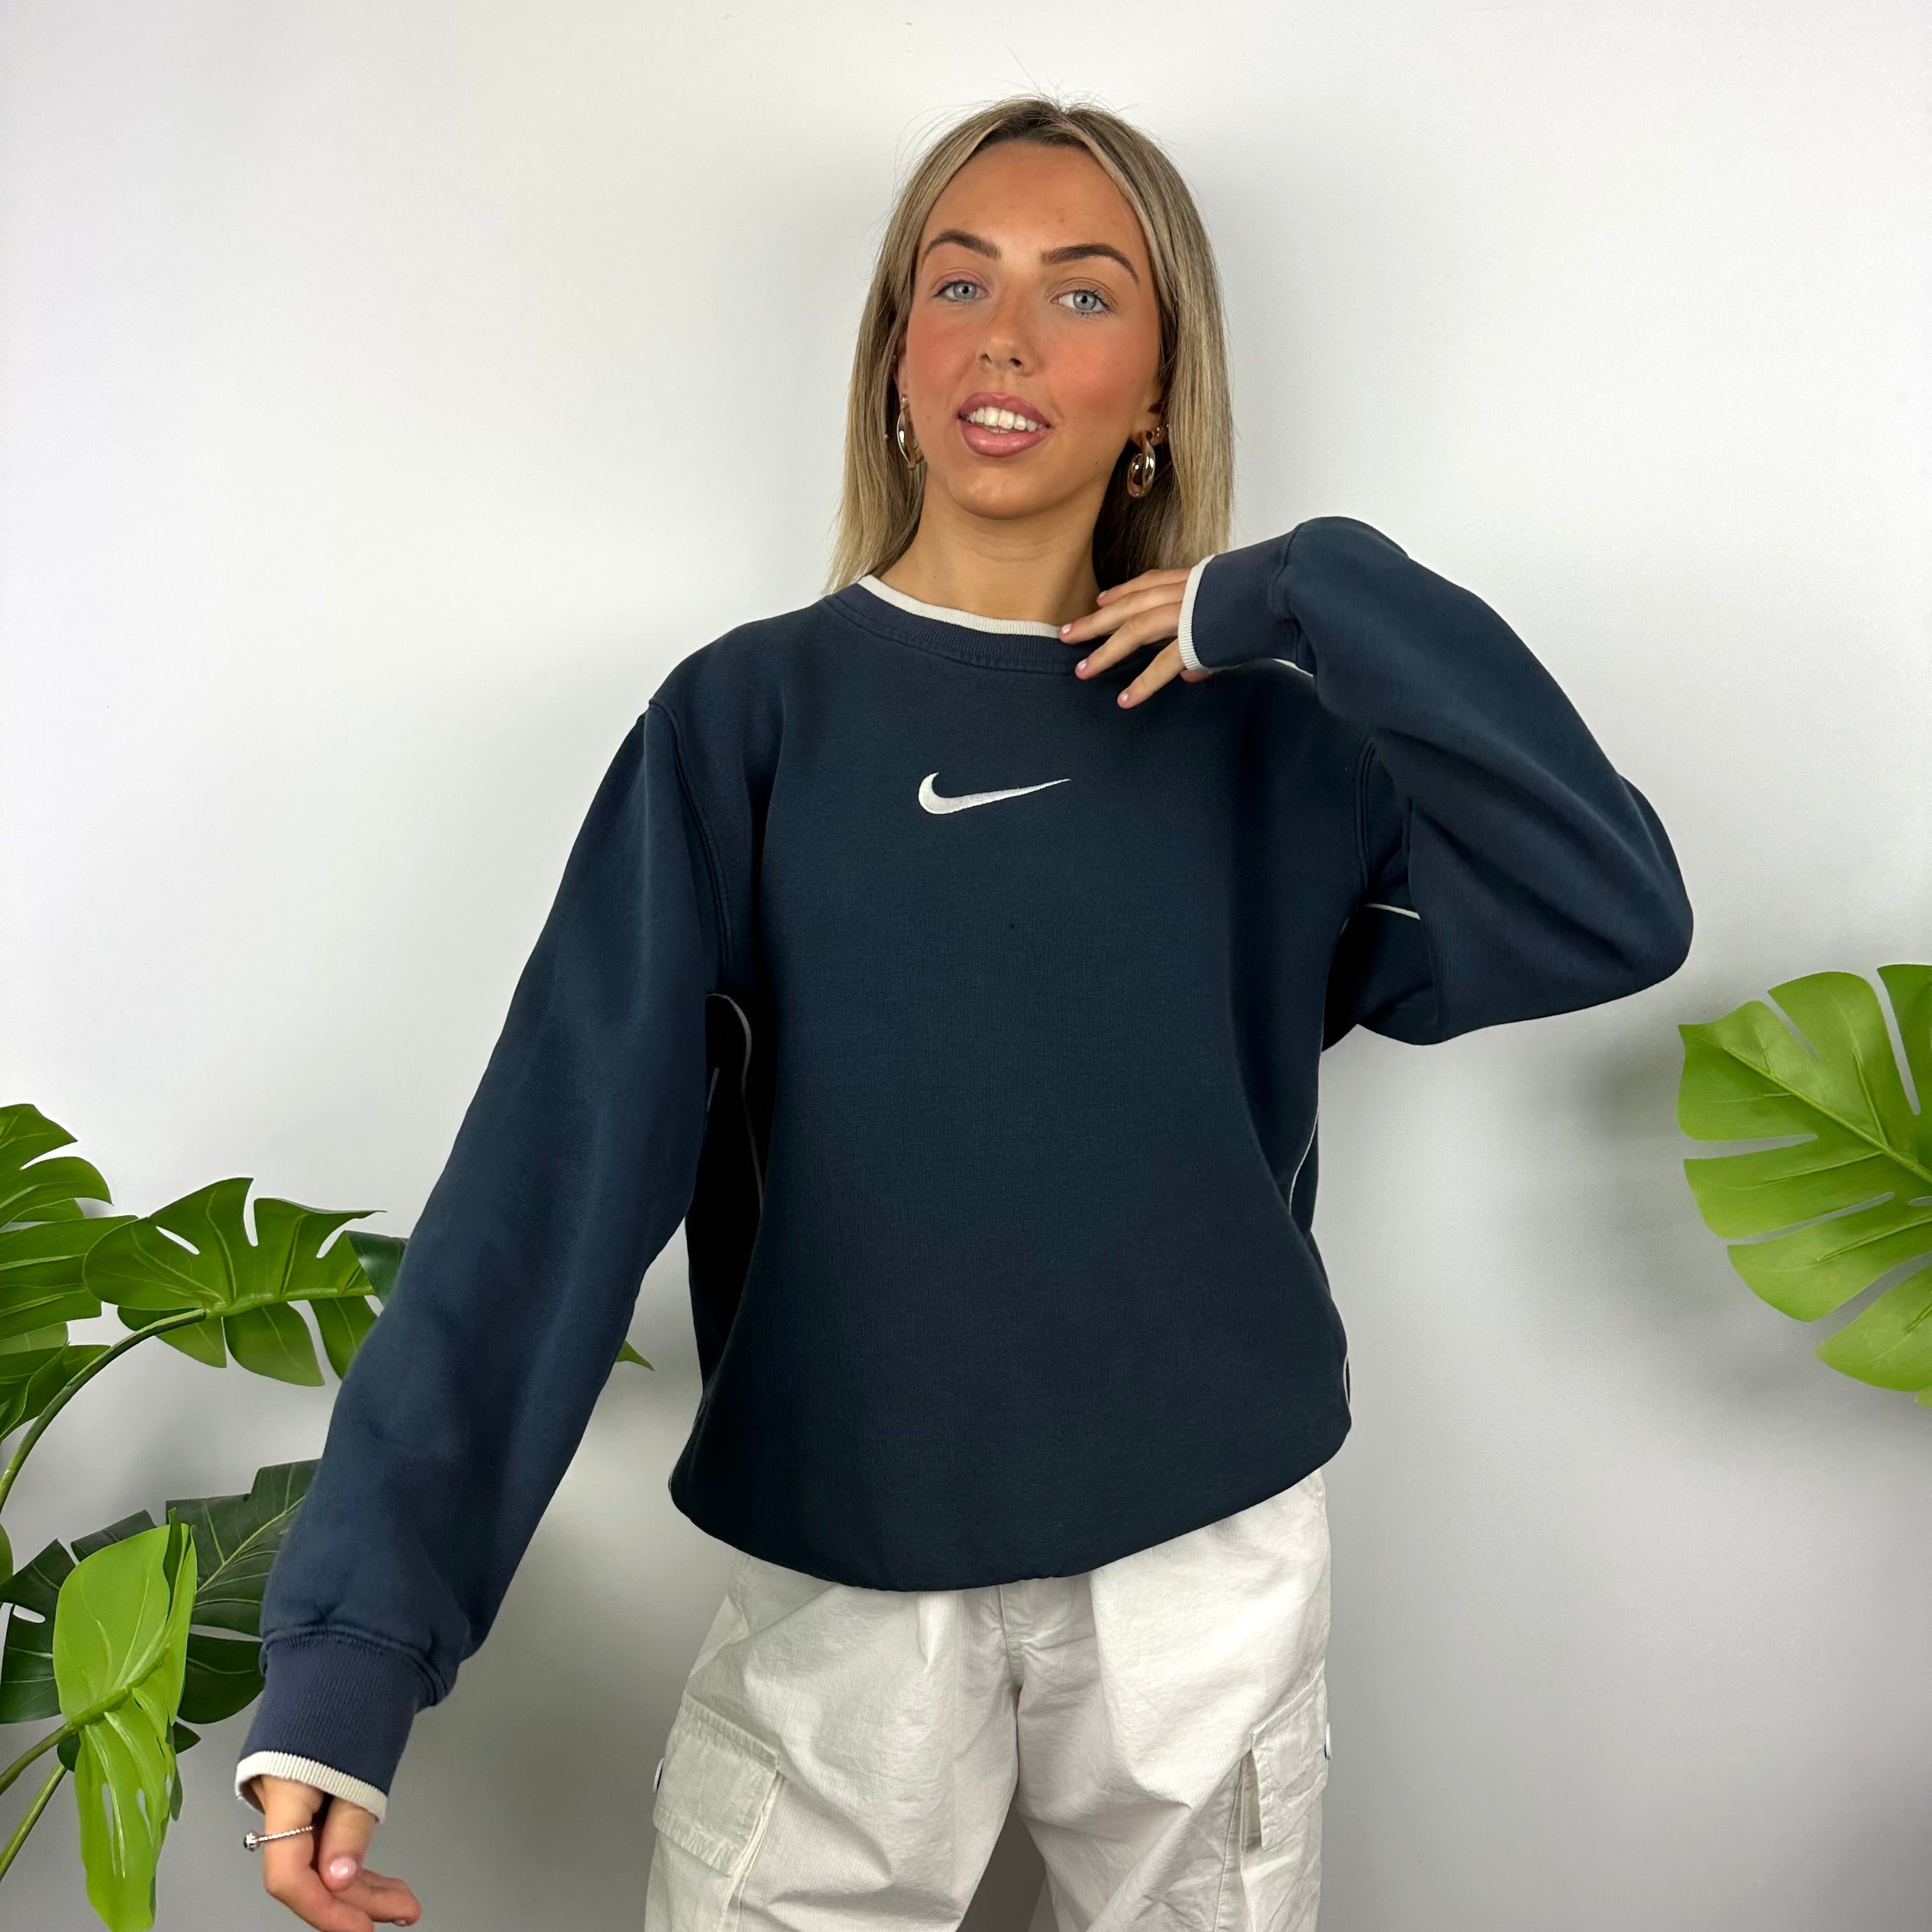 Nike Navy Embroidered Swoosh Sweatshirt (M)